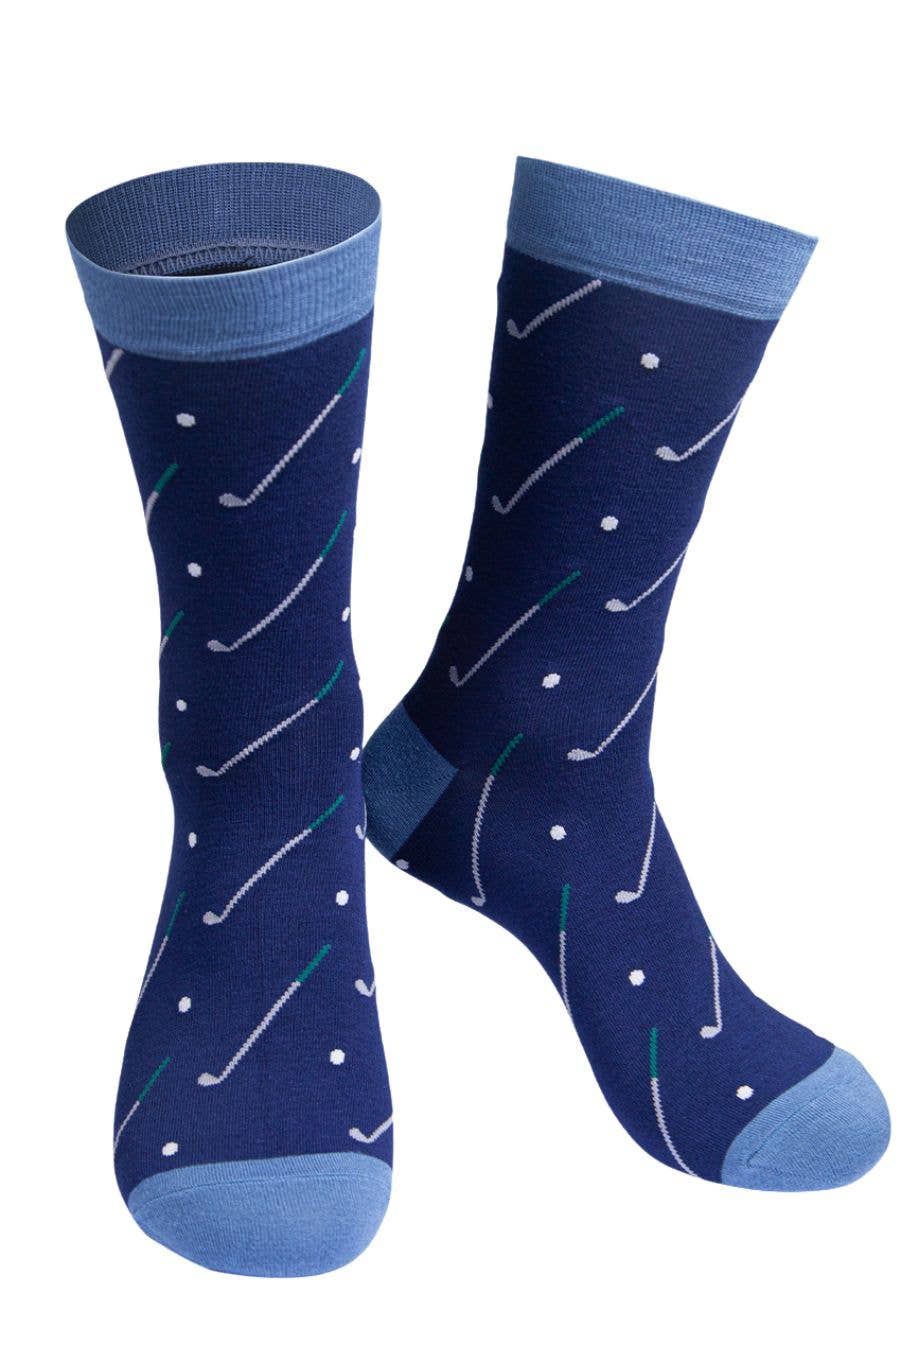 Sock Talk - Mens Bamboo Golf Socks Novelty Dress Socks Navy Blue